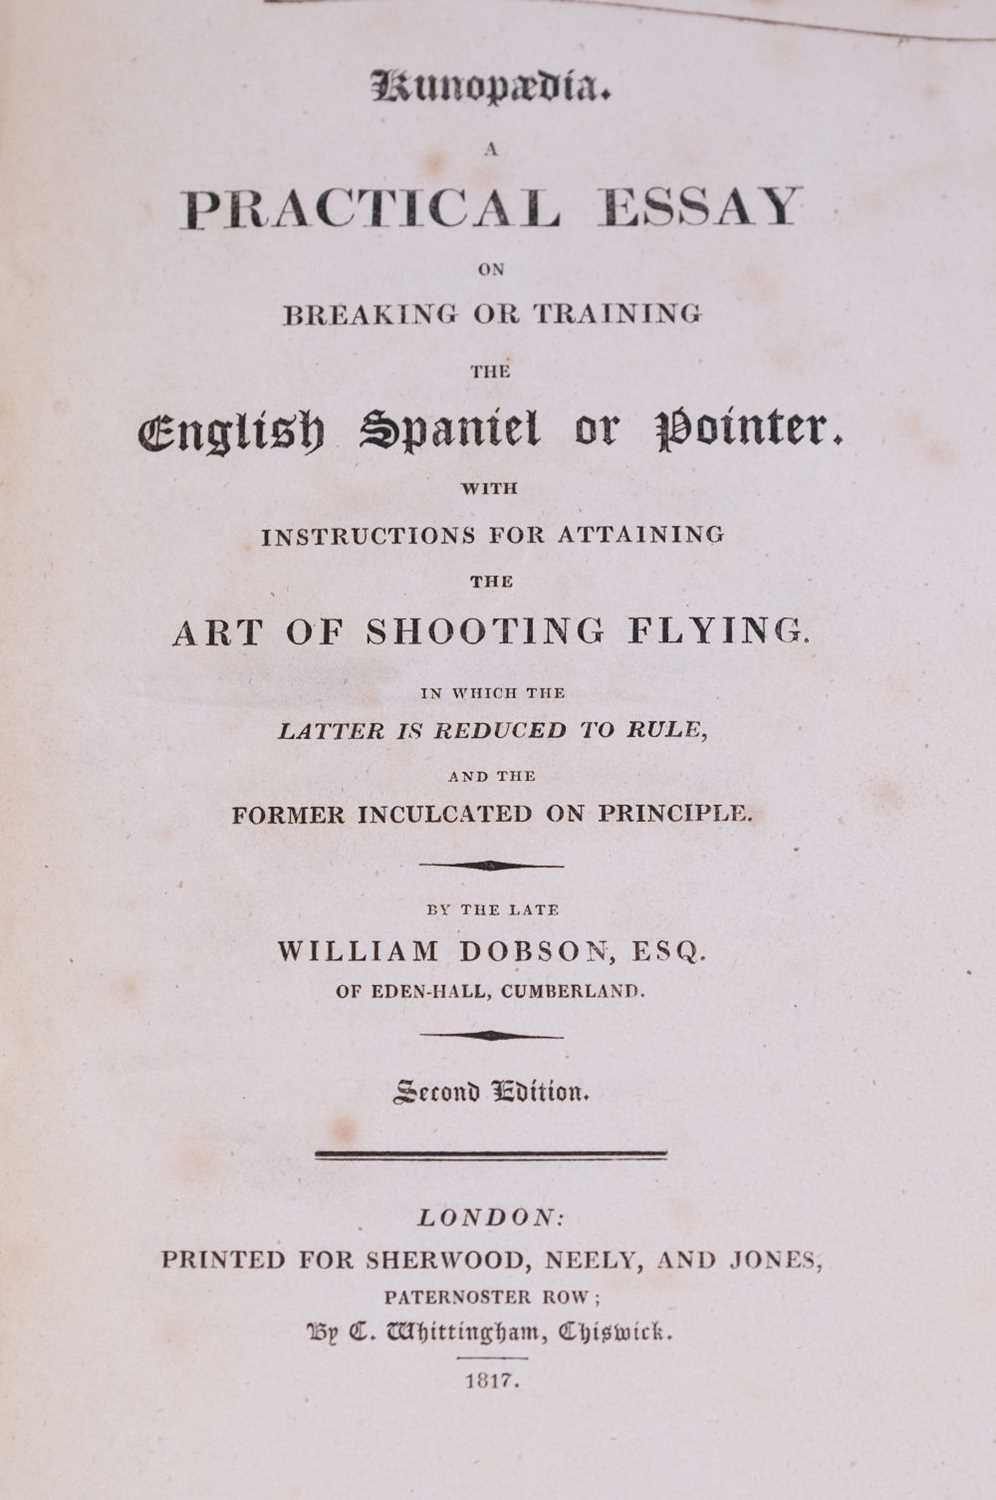 Lot 130 - Dobson (William). Kunopaedia, 2nd edition, 1817